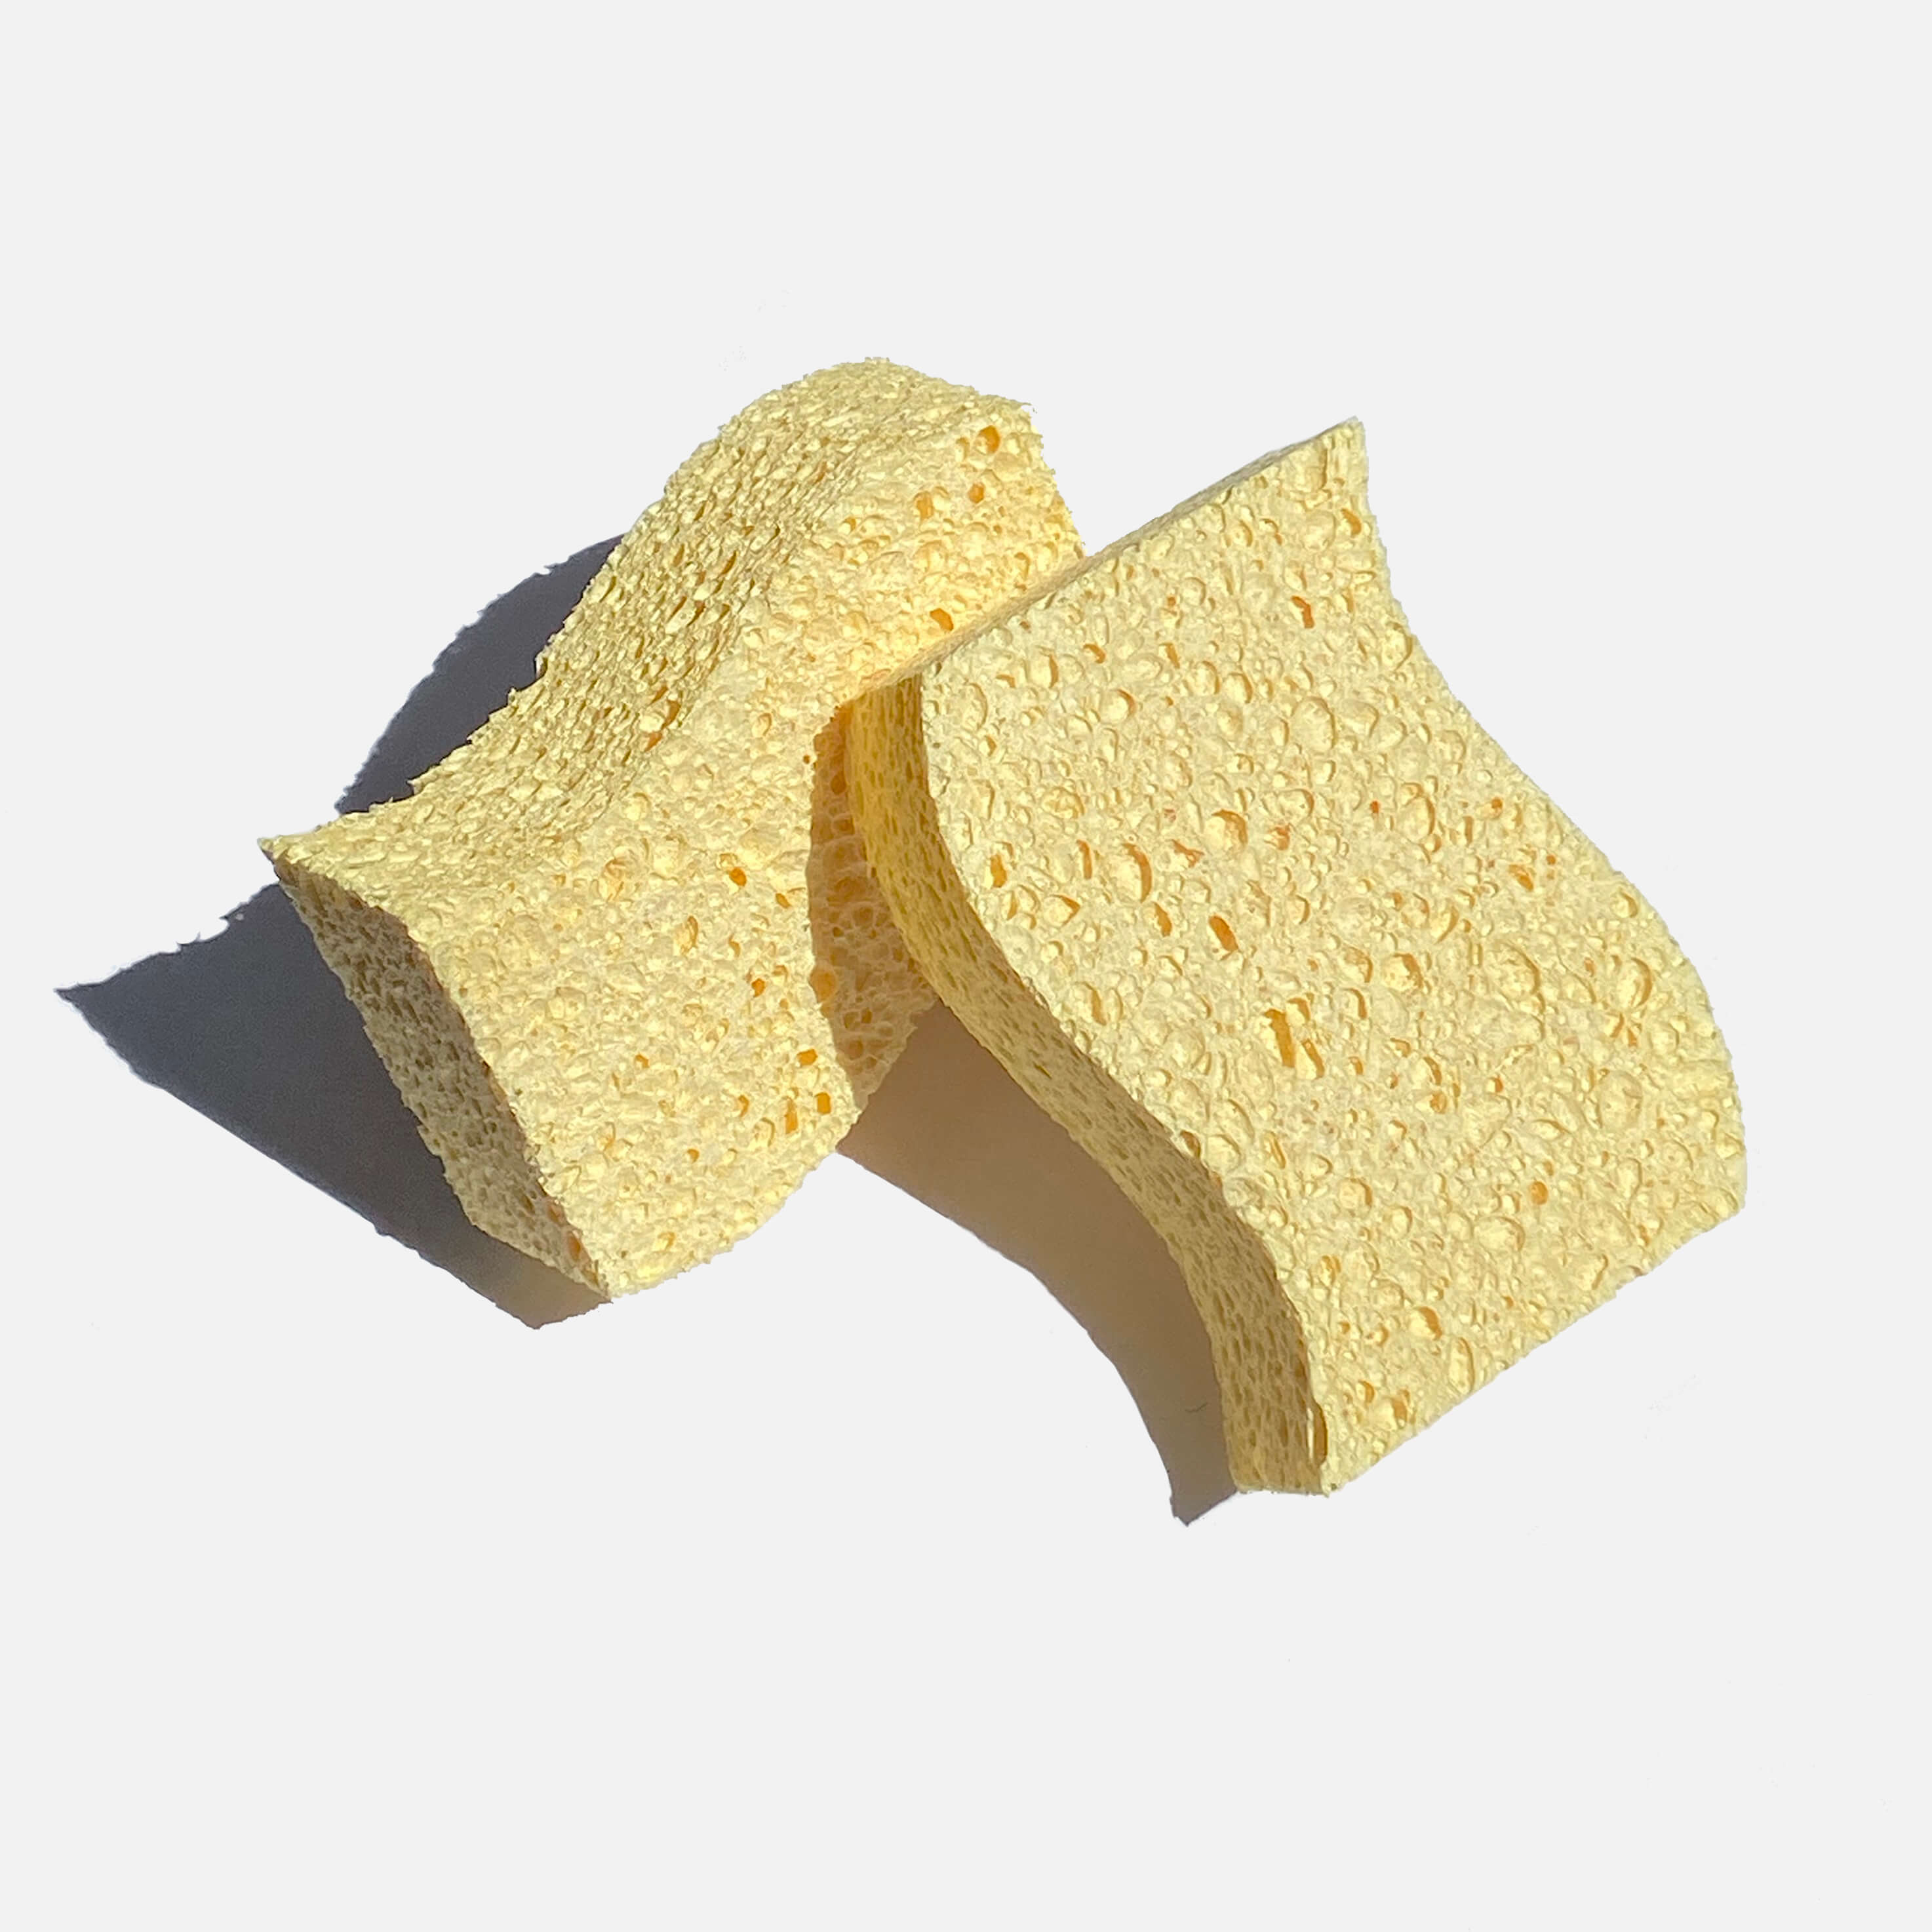 Zero Waste Club - Biodegradable Kitchen Sponges (2 pack)